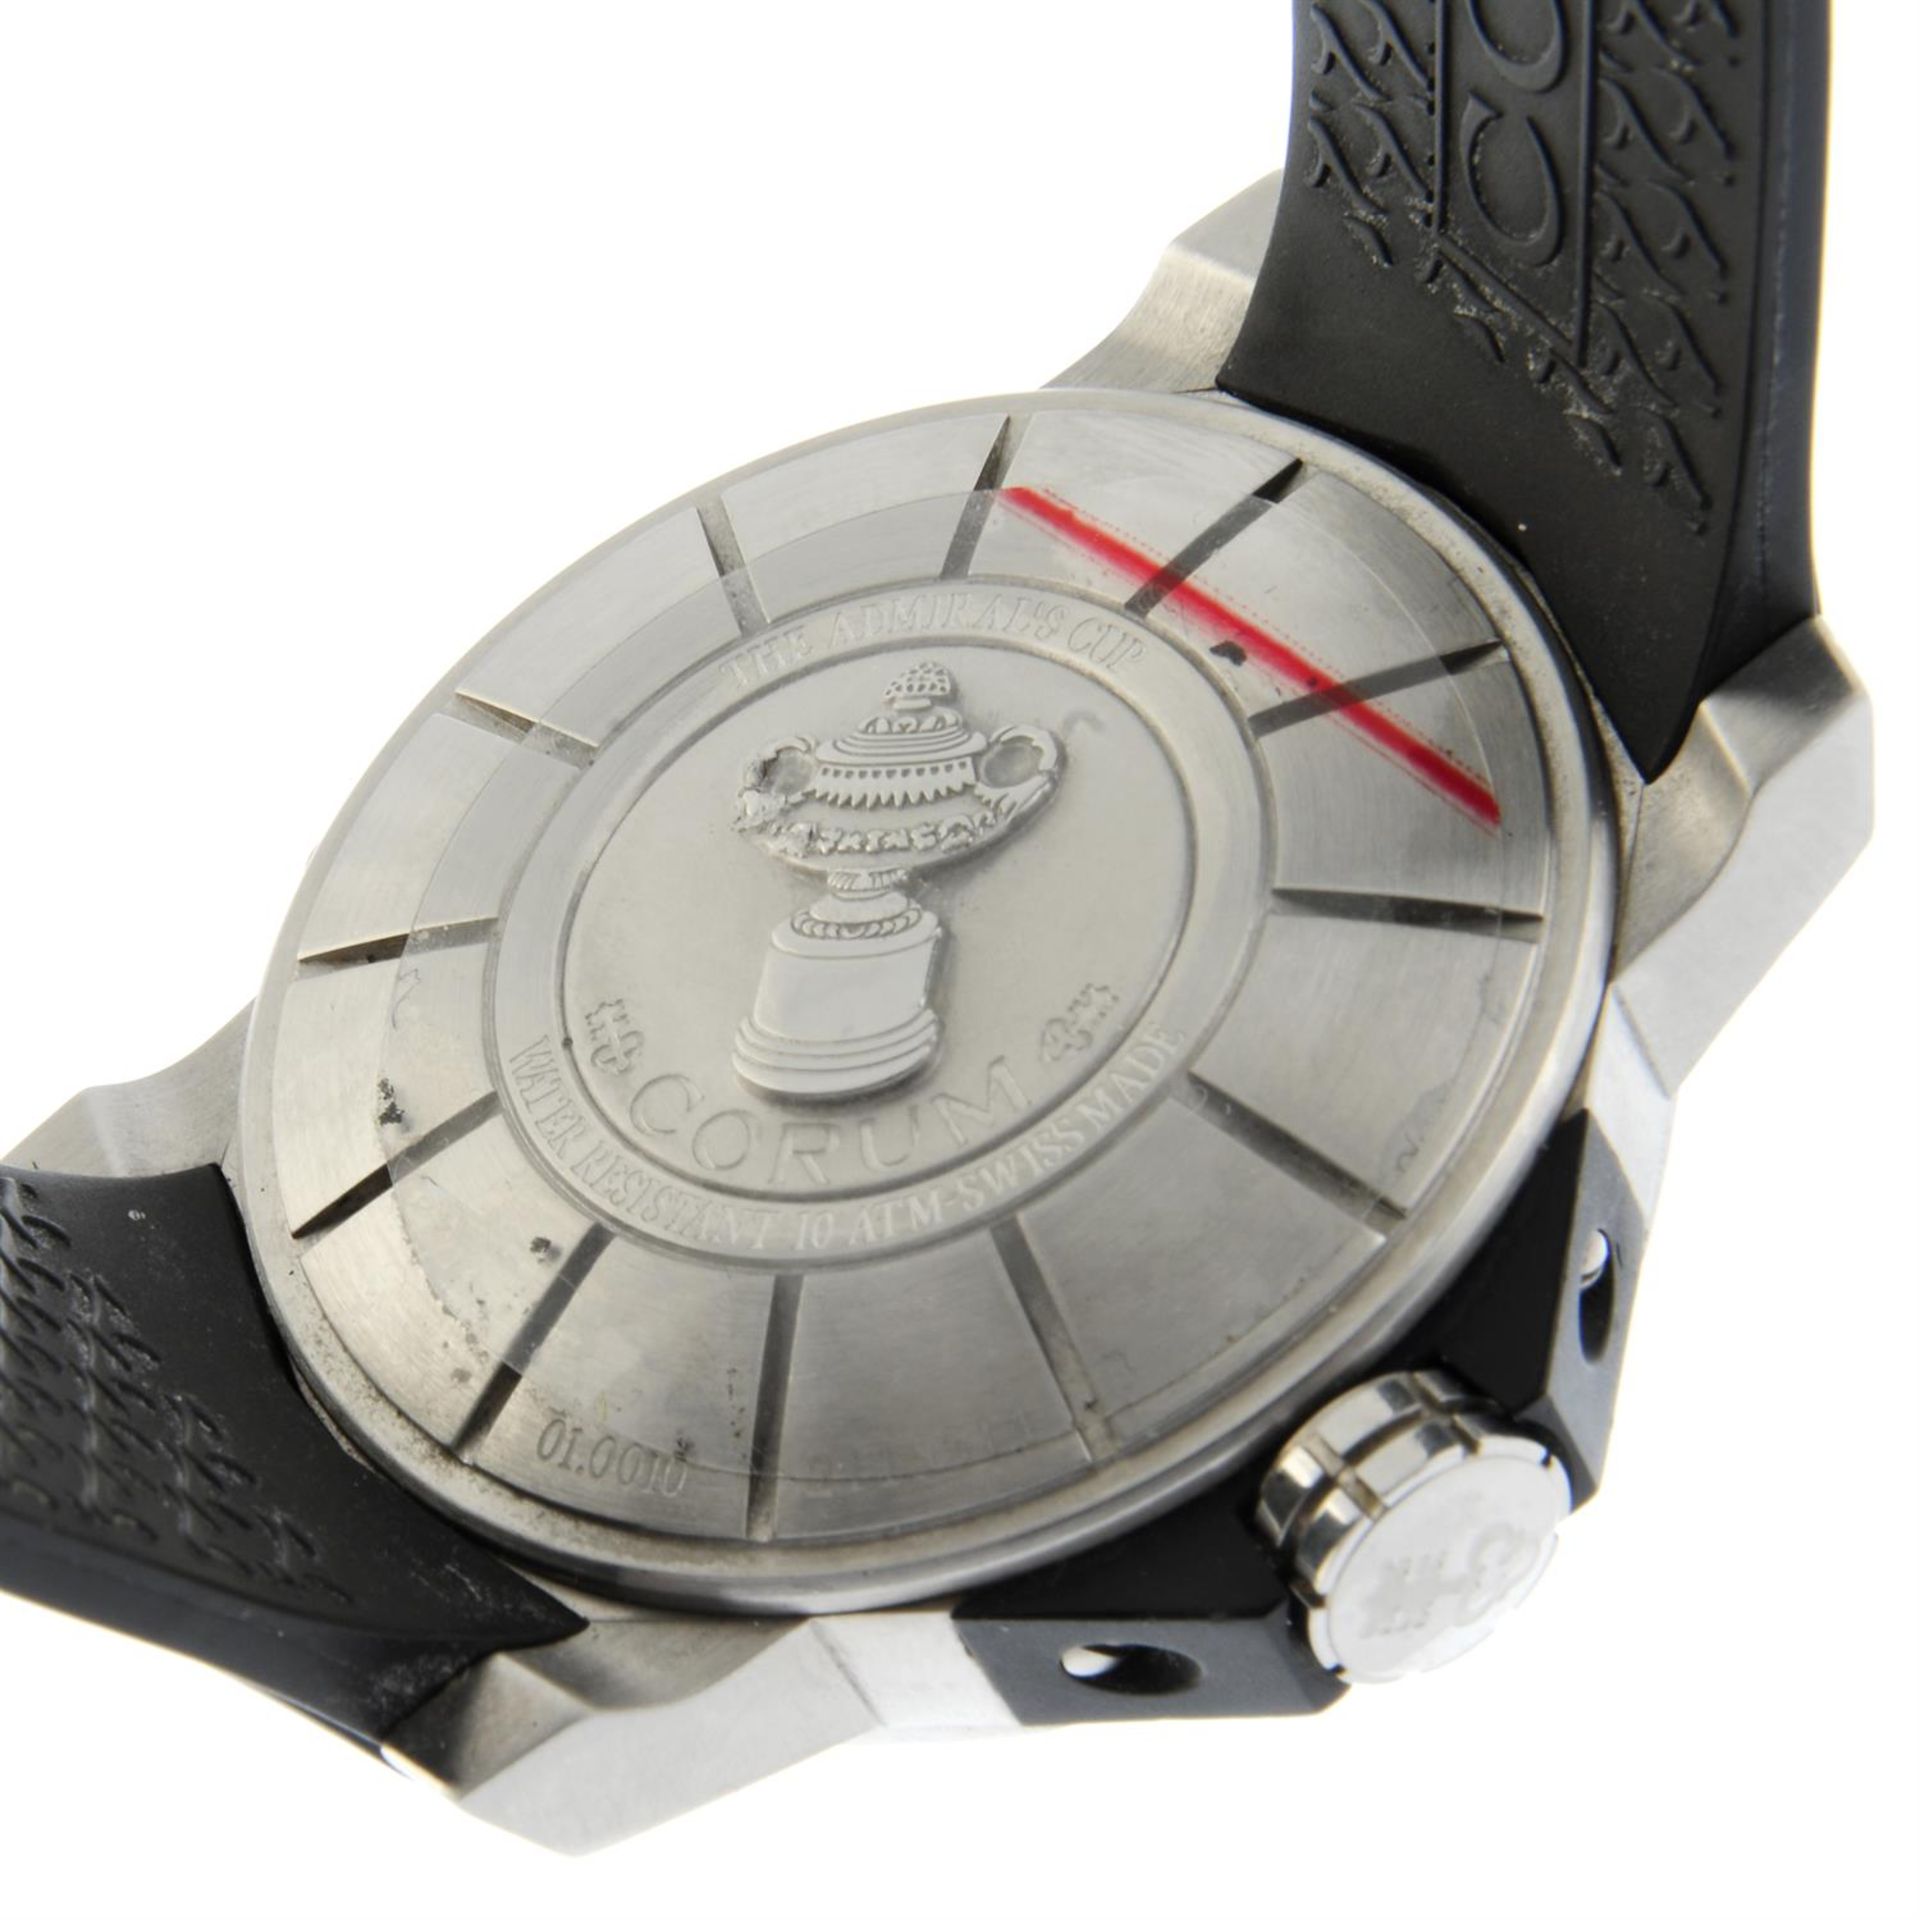 Corum - an Admirals Cup watch, 41mm. - Image 4 of 6